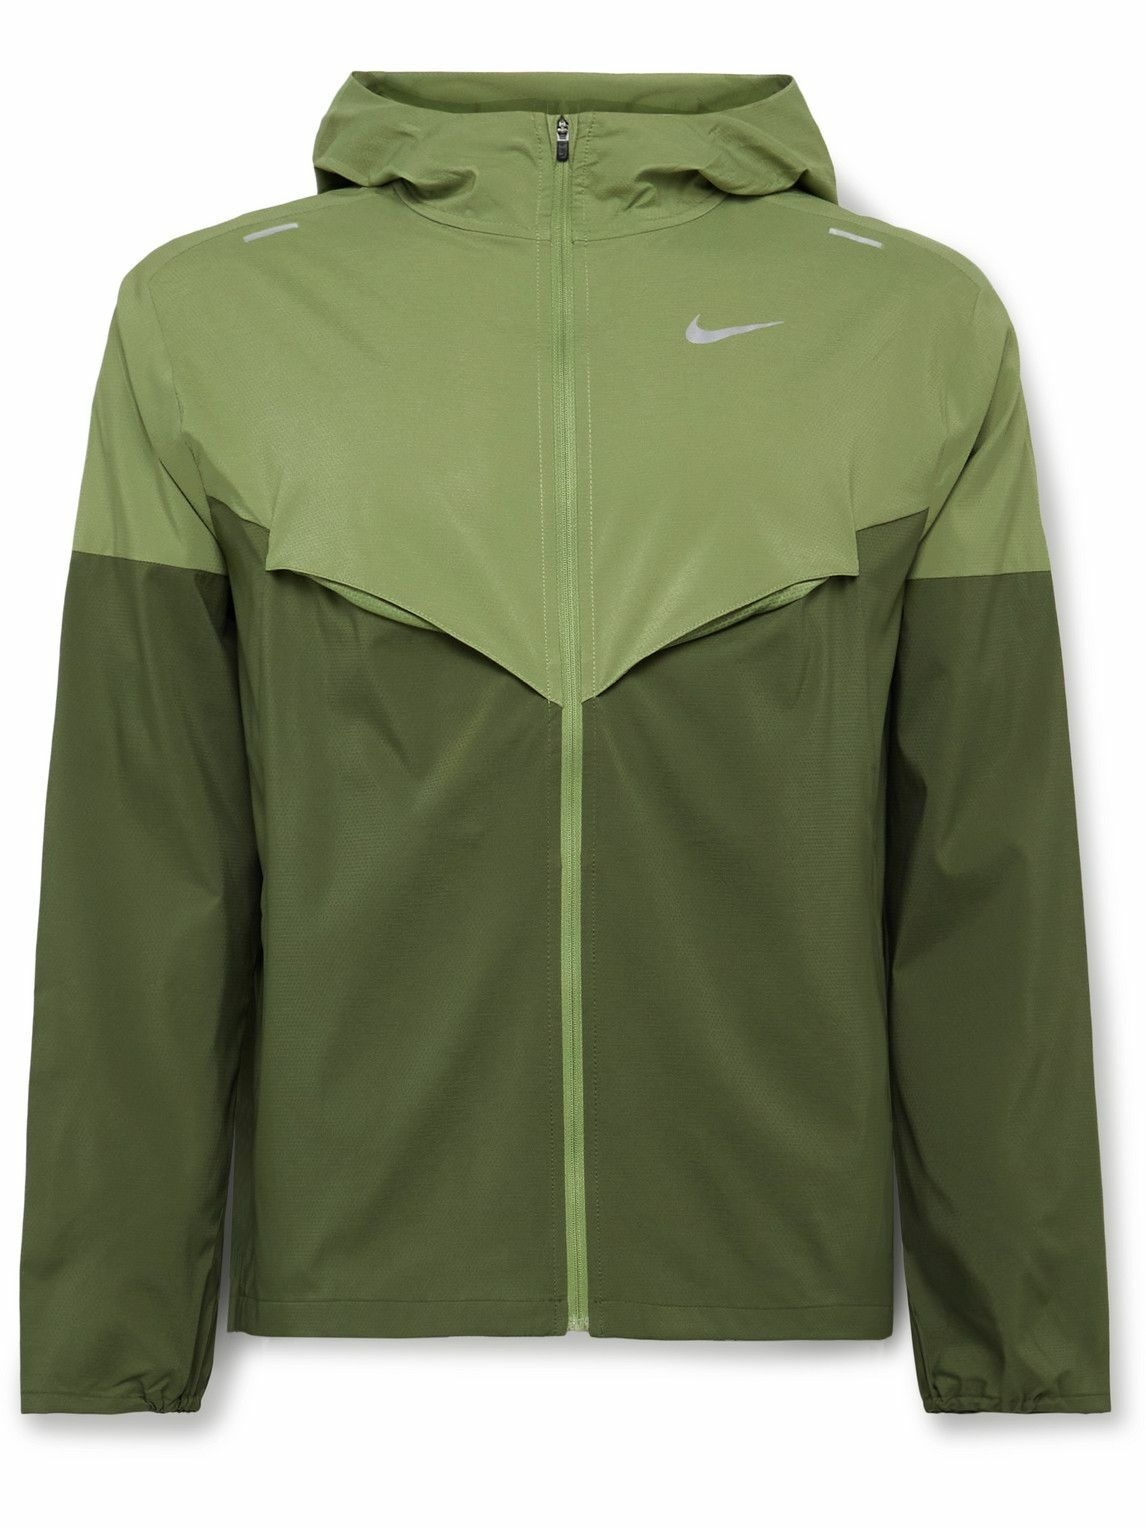 Nike Running - Nathan Bell A.I.R. Printed Nylon Jacket - Gray Nike 